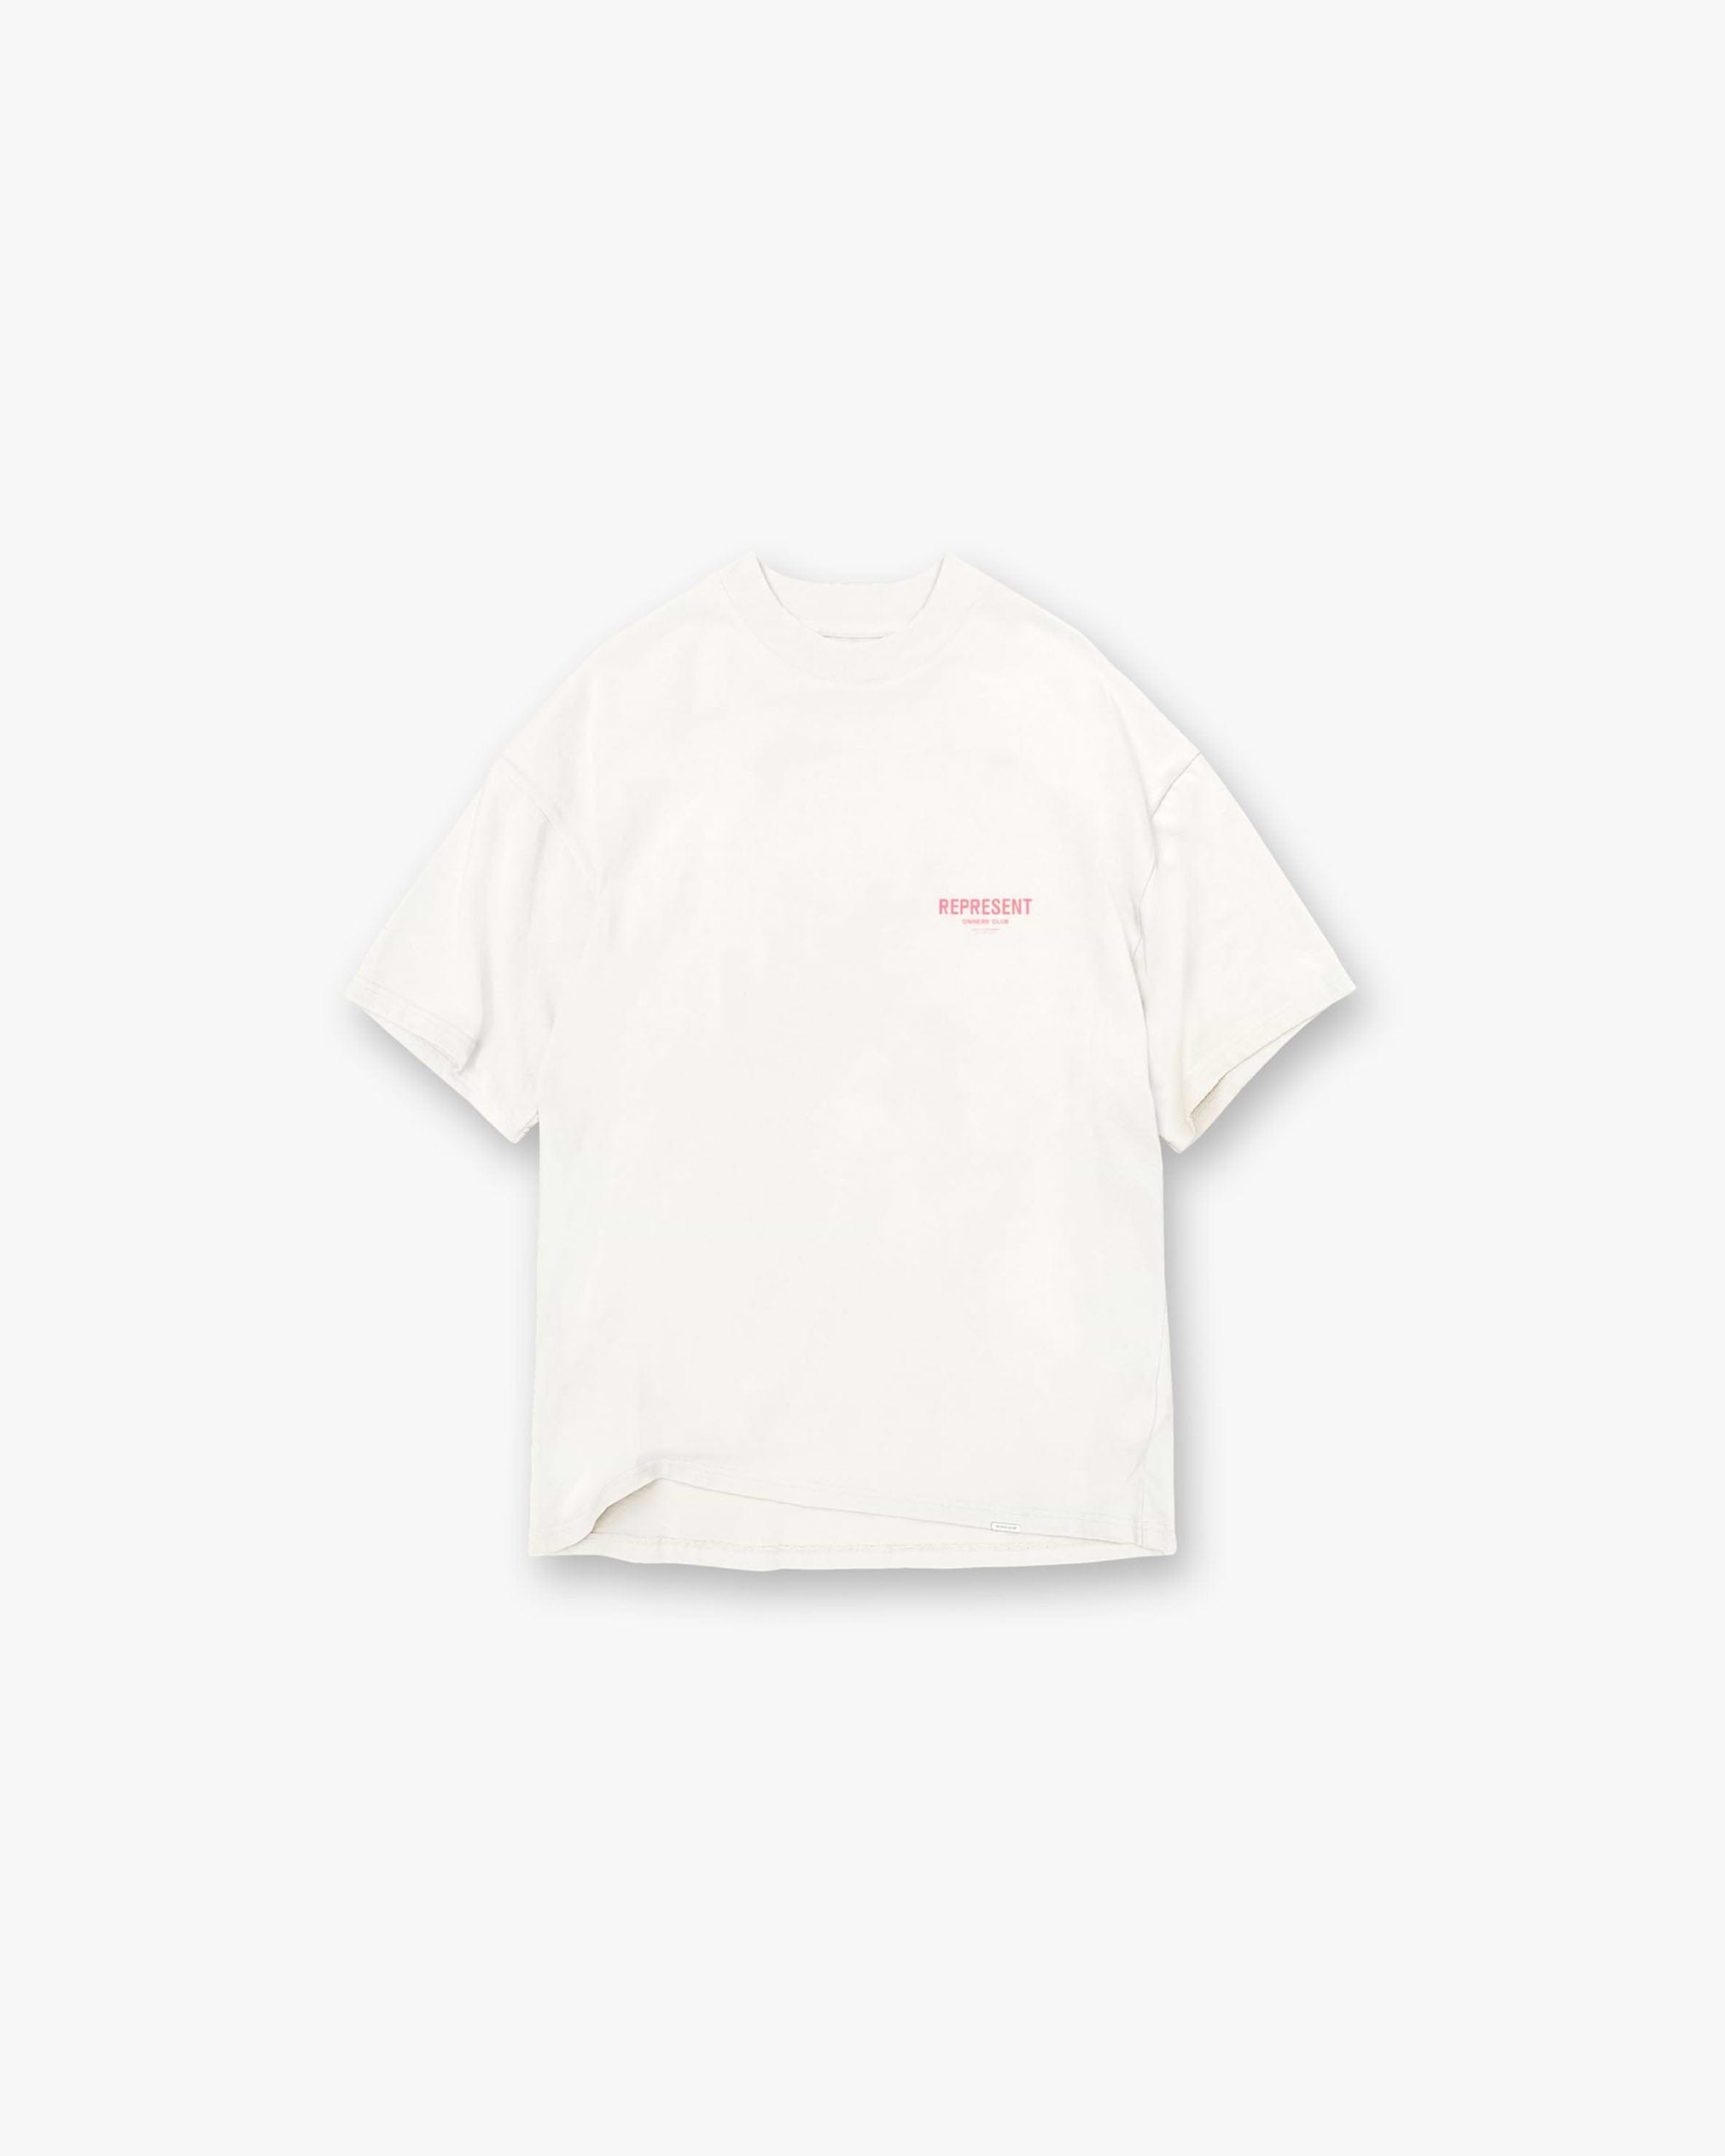 Flat White & Bubblegum T-Shirt | Owners Club | REPRESENT CLO